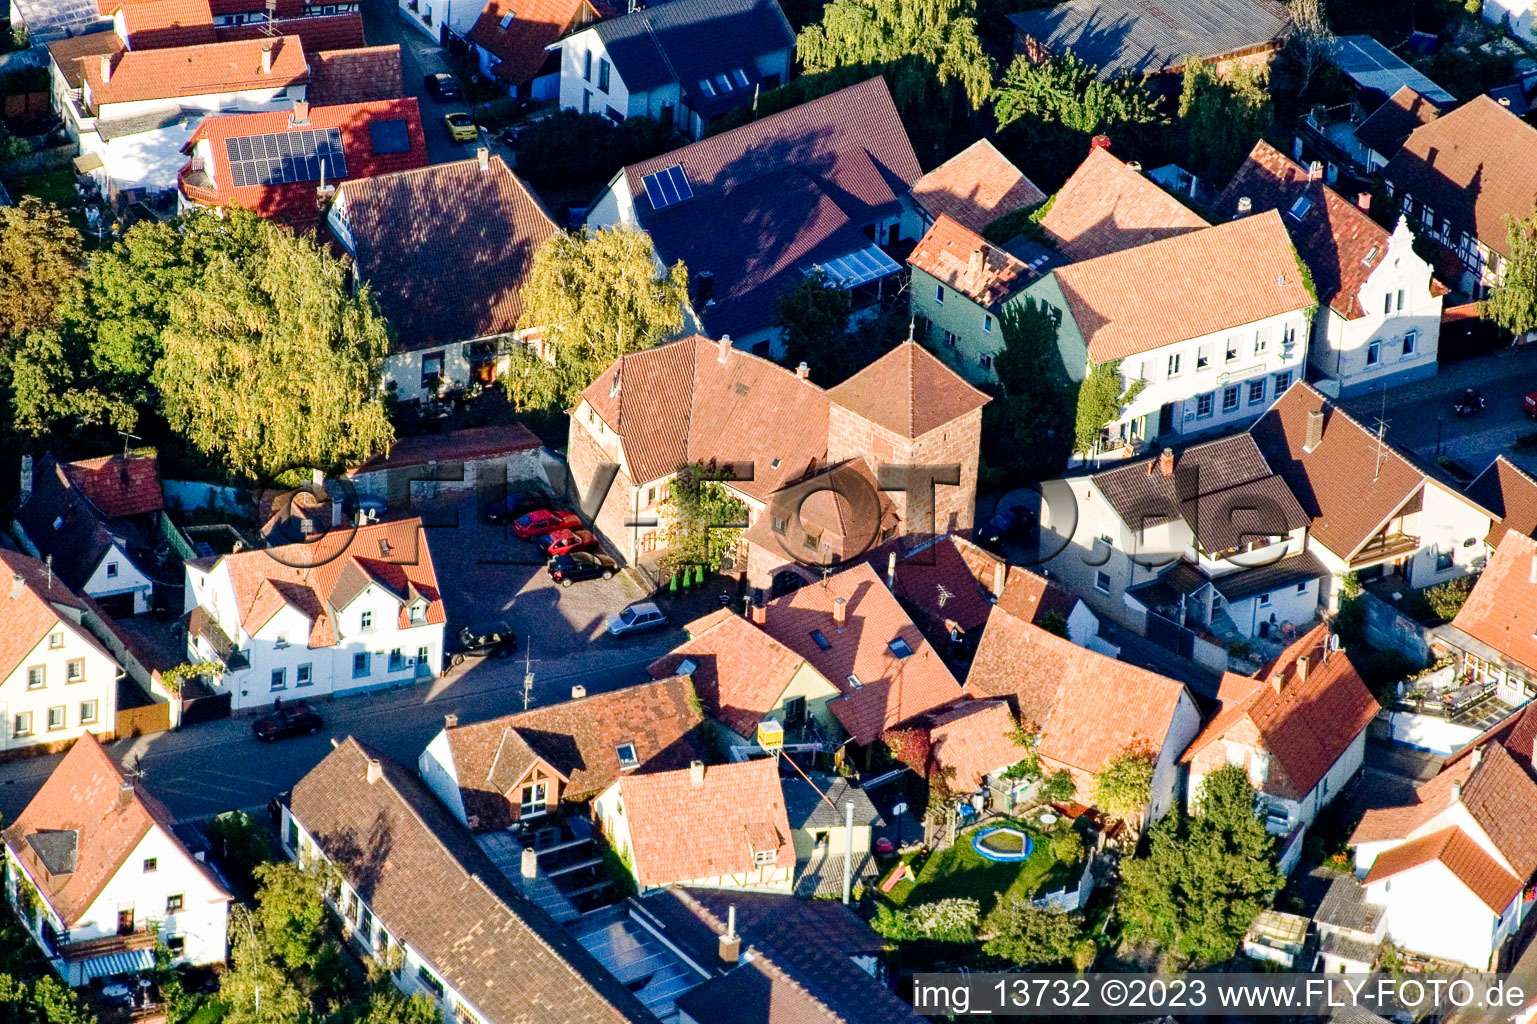 District Billigheim in Billigheim-Ingenheim in the state Rhineland-Palatinate, Germany from a drone